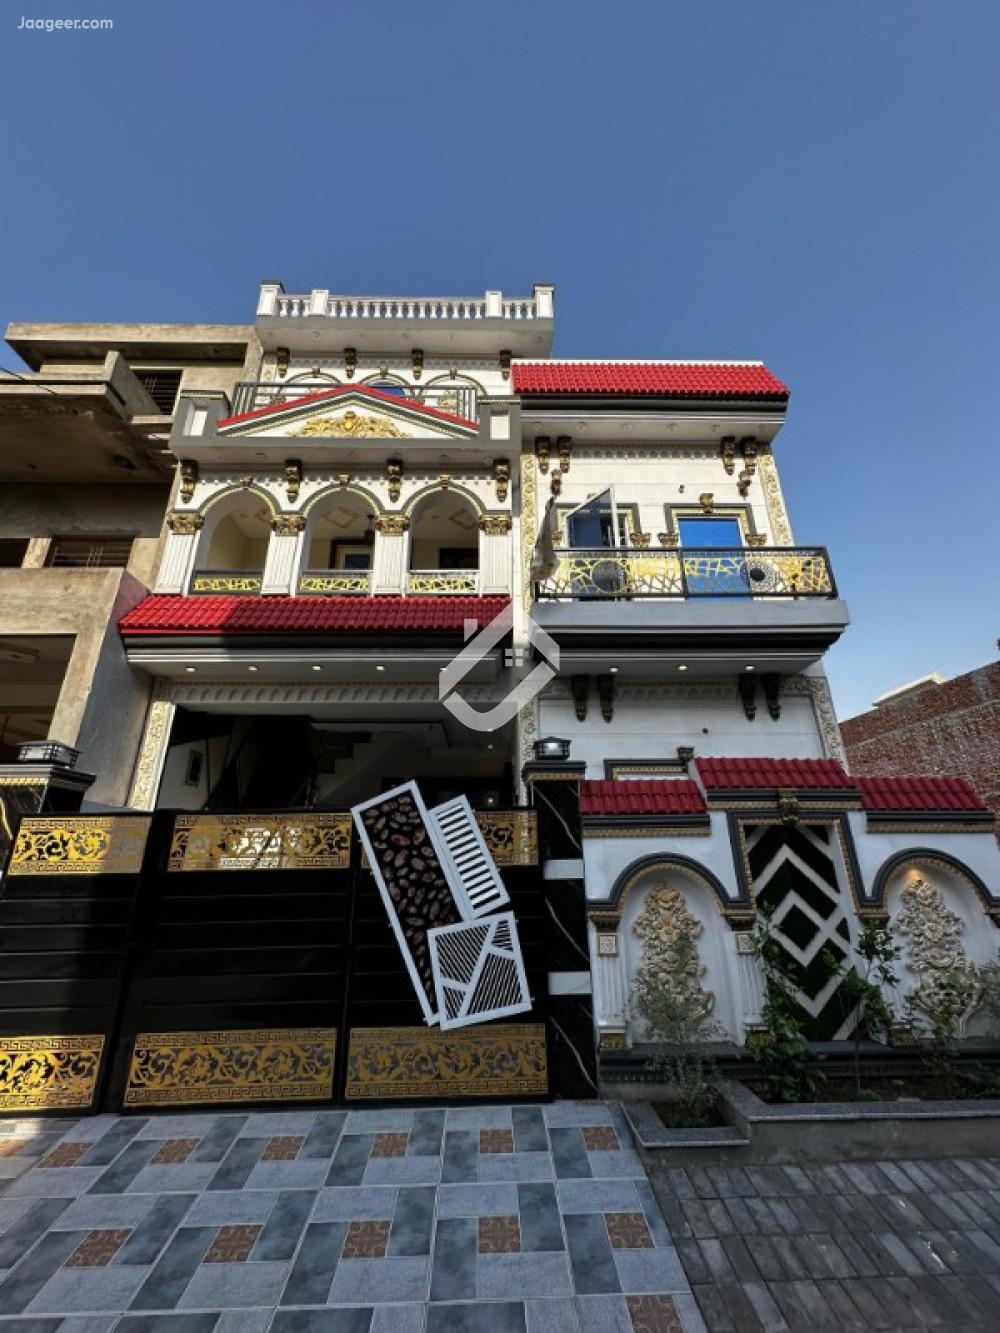 Main image 5 Marla Double Storey Stunning House For Sale In Al Rehman Garden Phase 2  Near Faizpur Interchange Jaranwala Road 